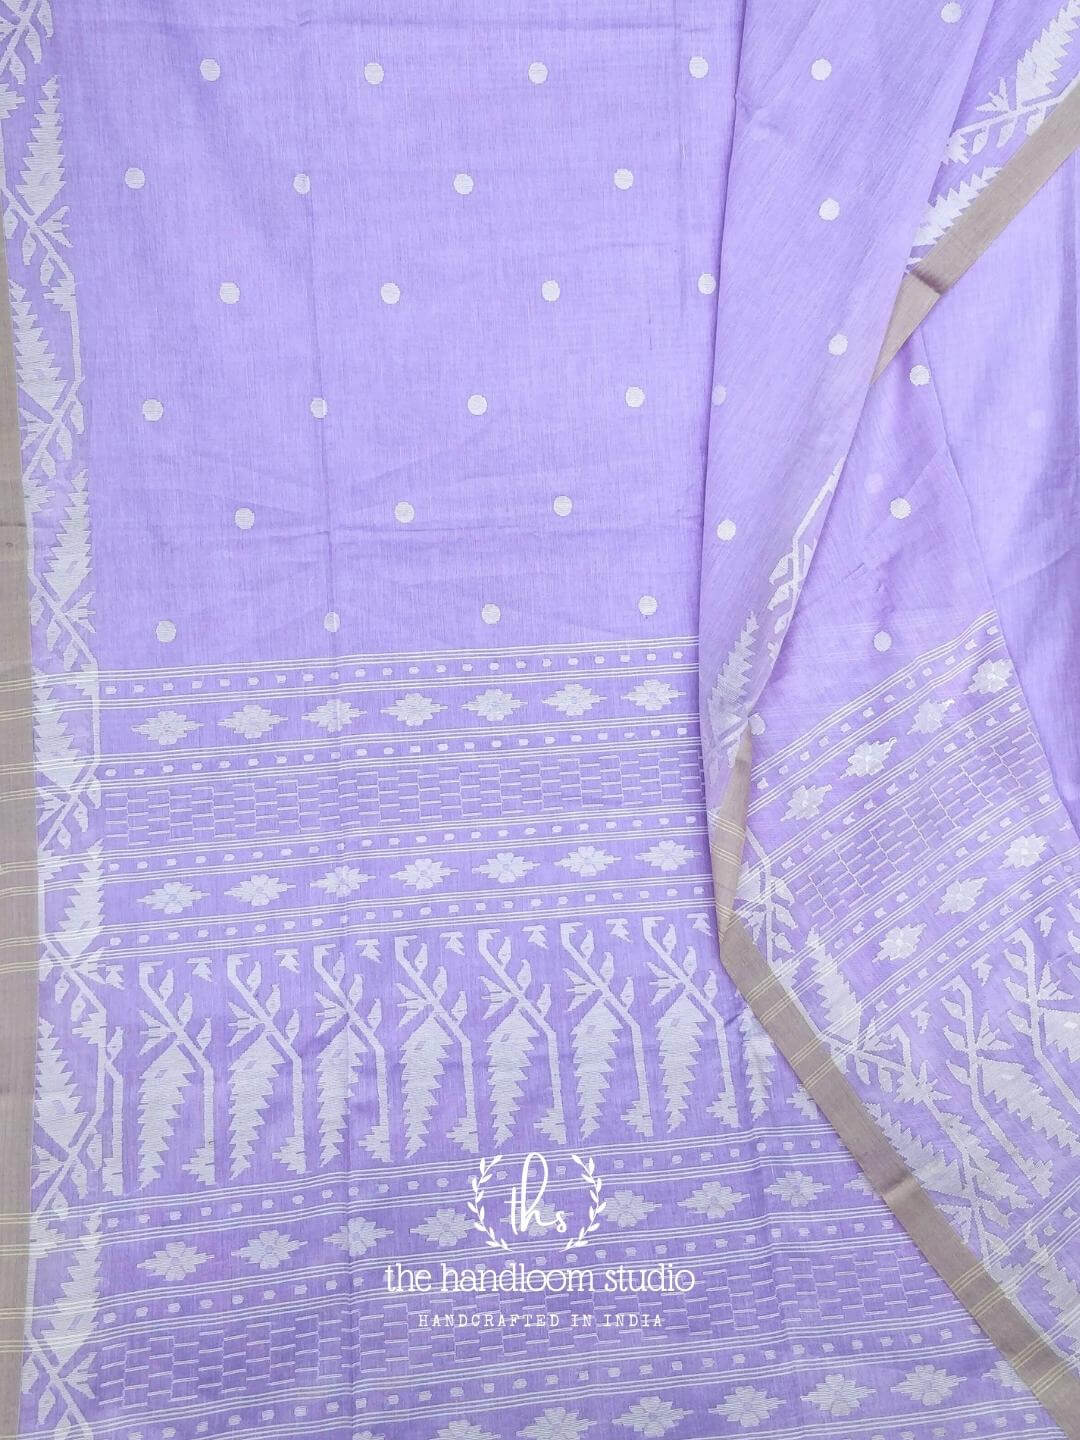 Lavender cotton handloom jamdani saree